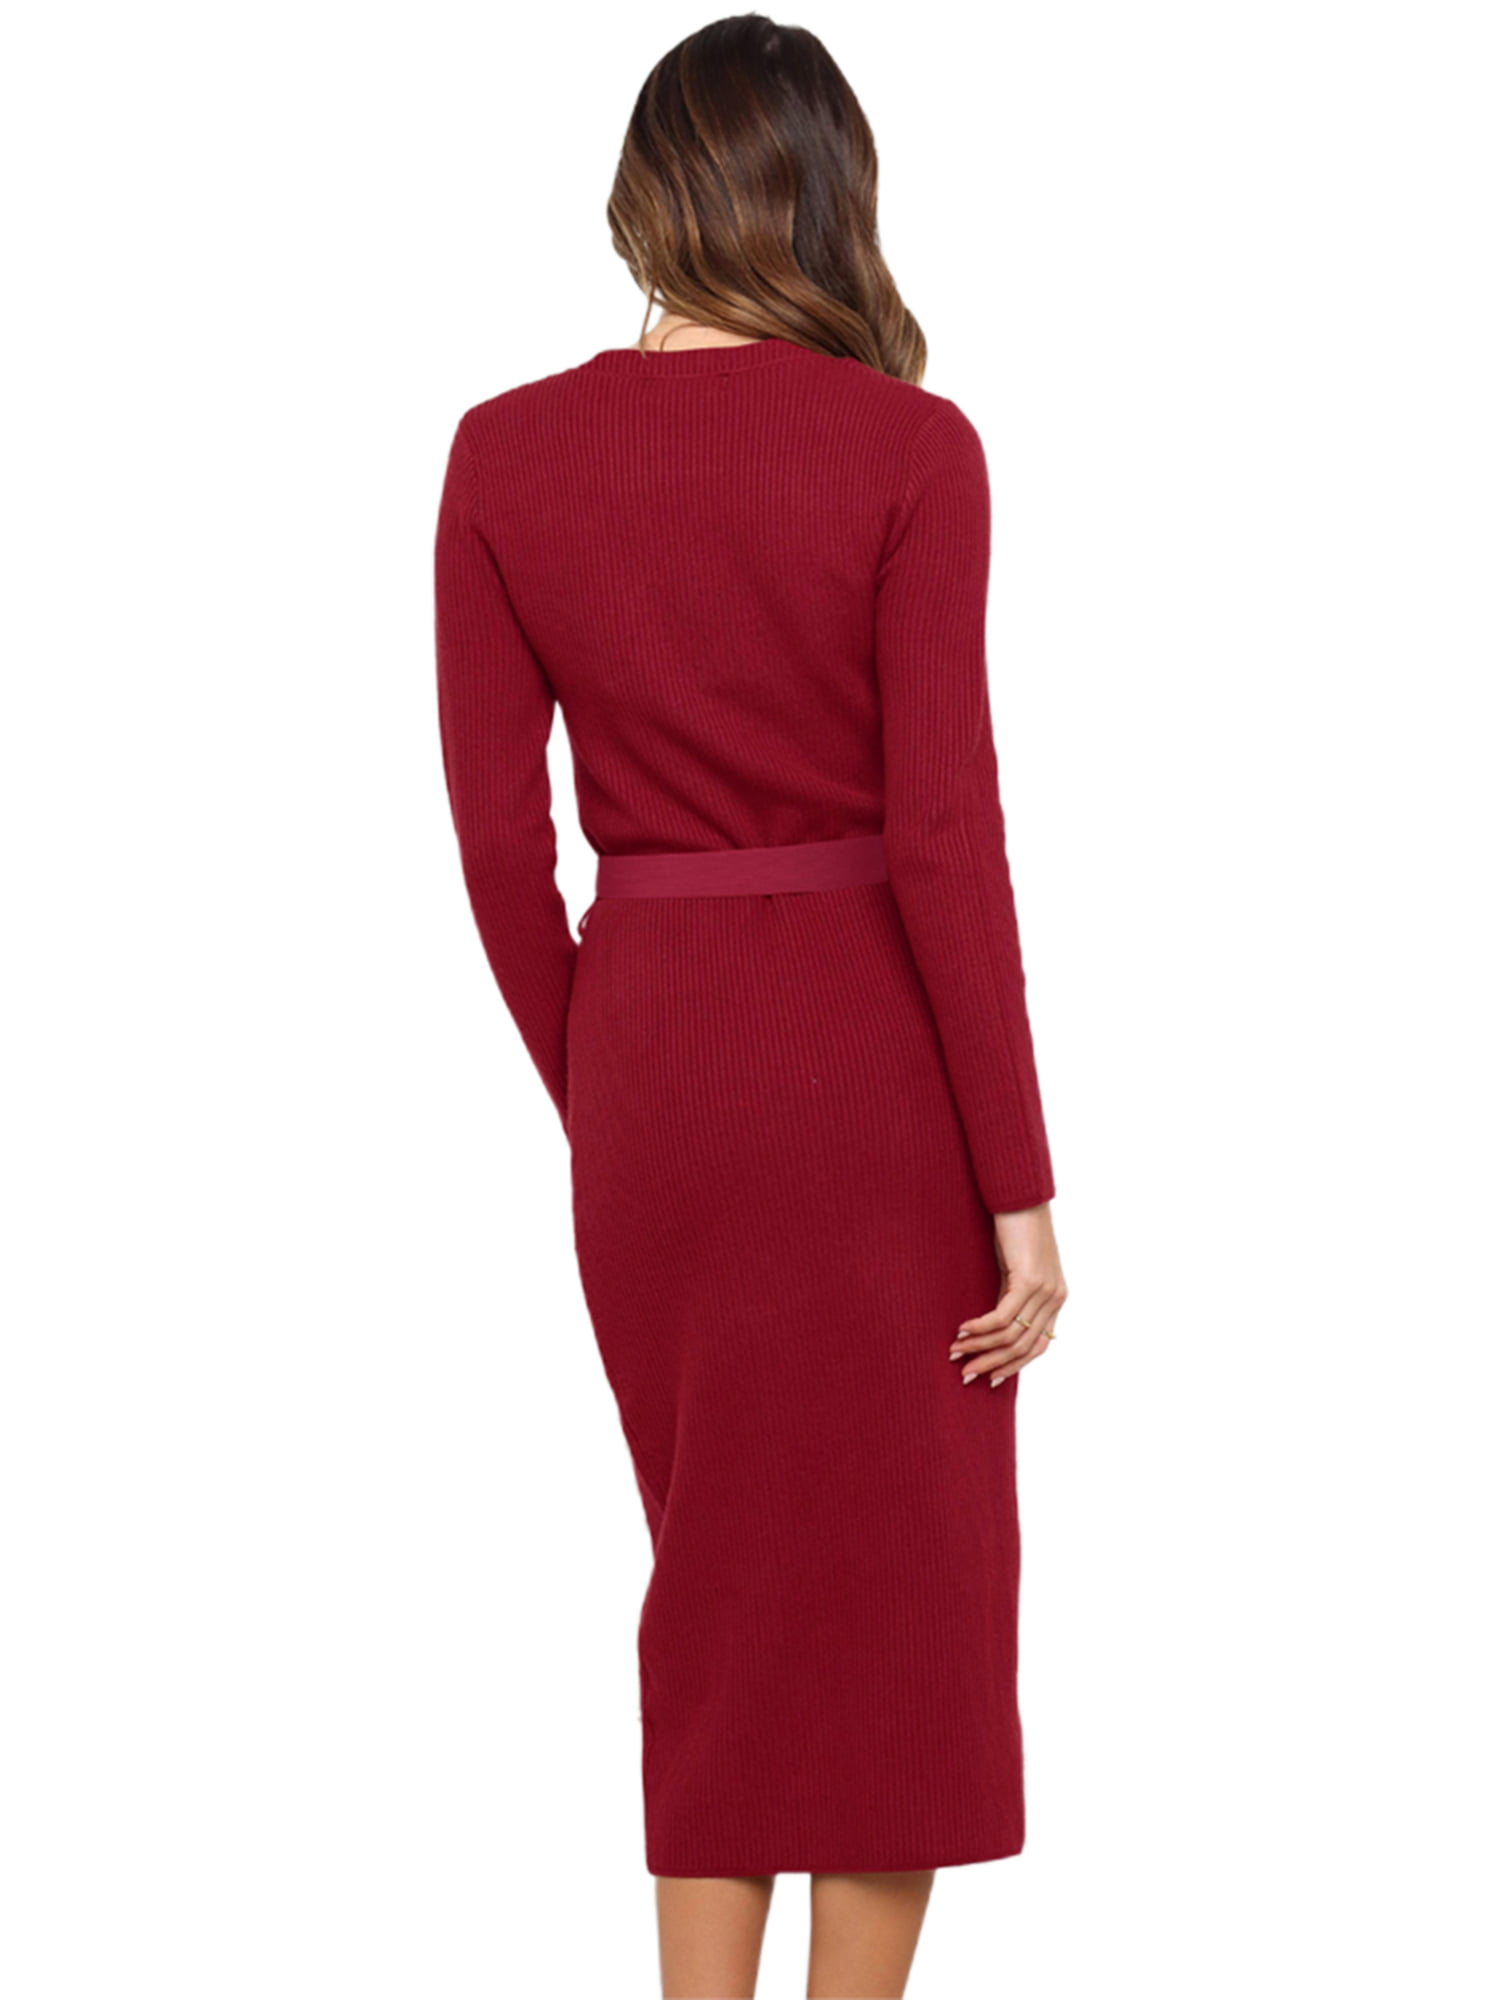 Womens Elegant Long Sleeve Jumper Dress V-Neck Knitted Dress Backless Sweater Dress Tunic Dress with Belt 